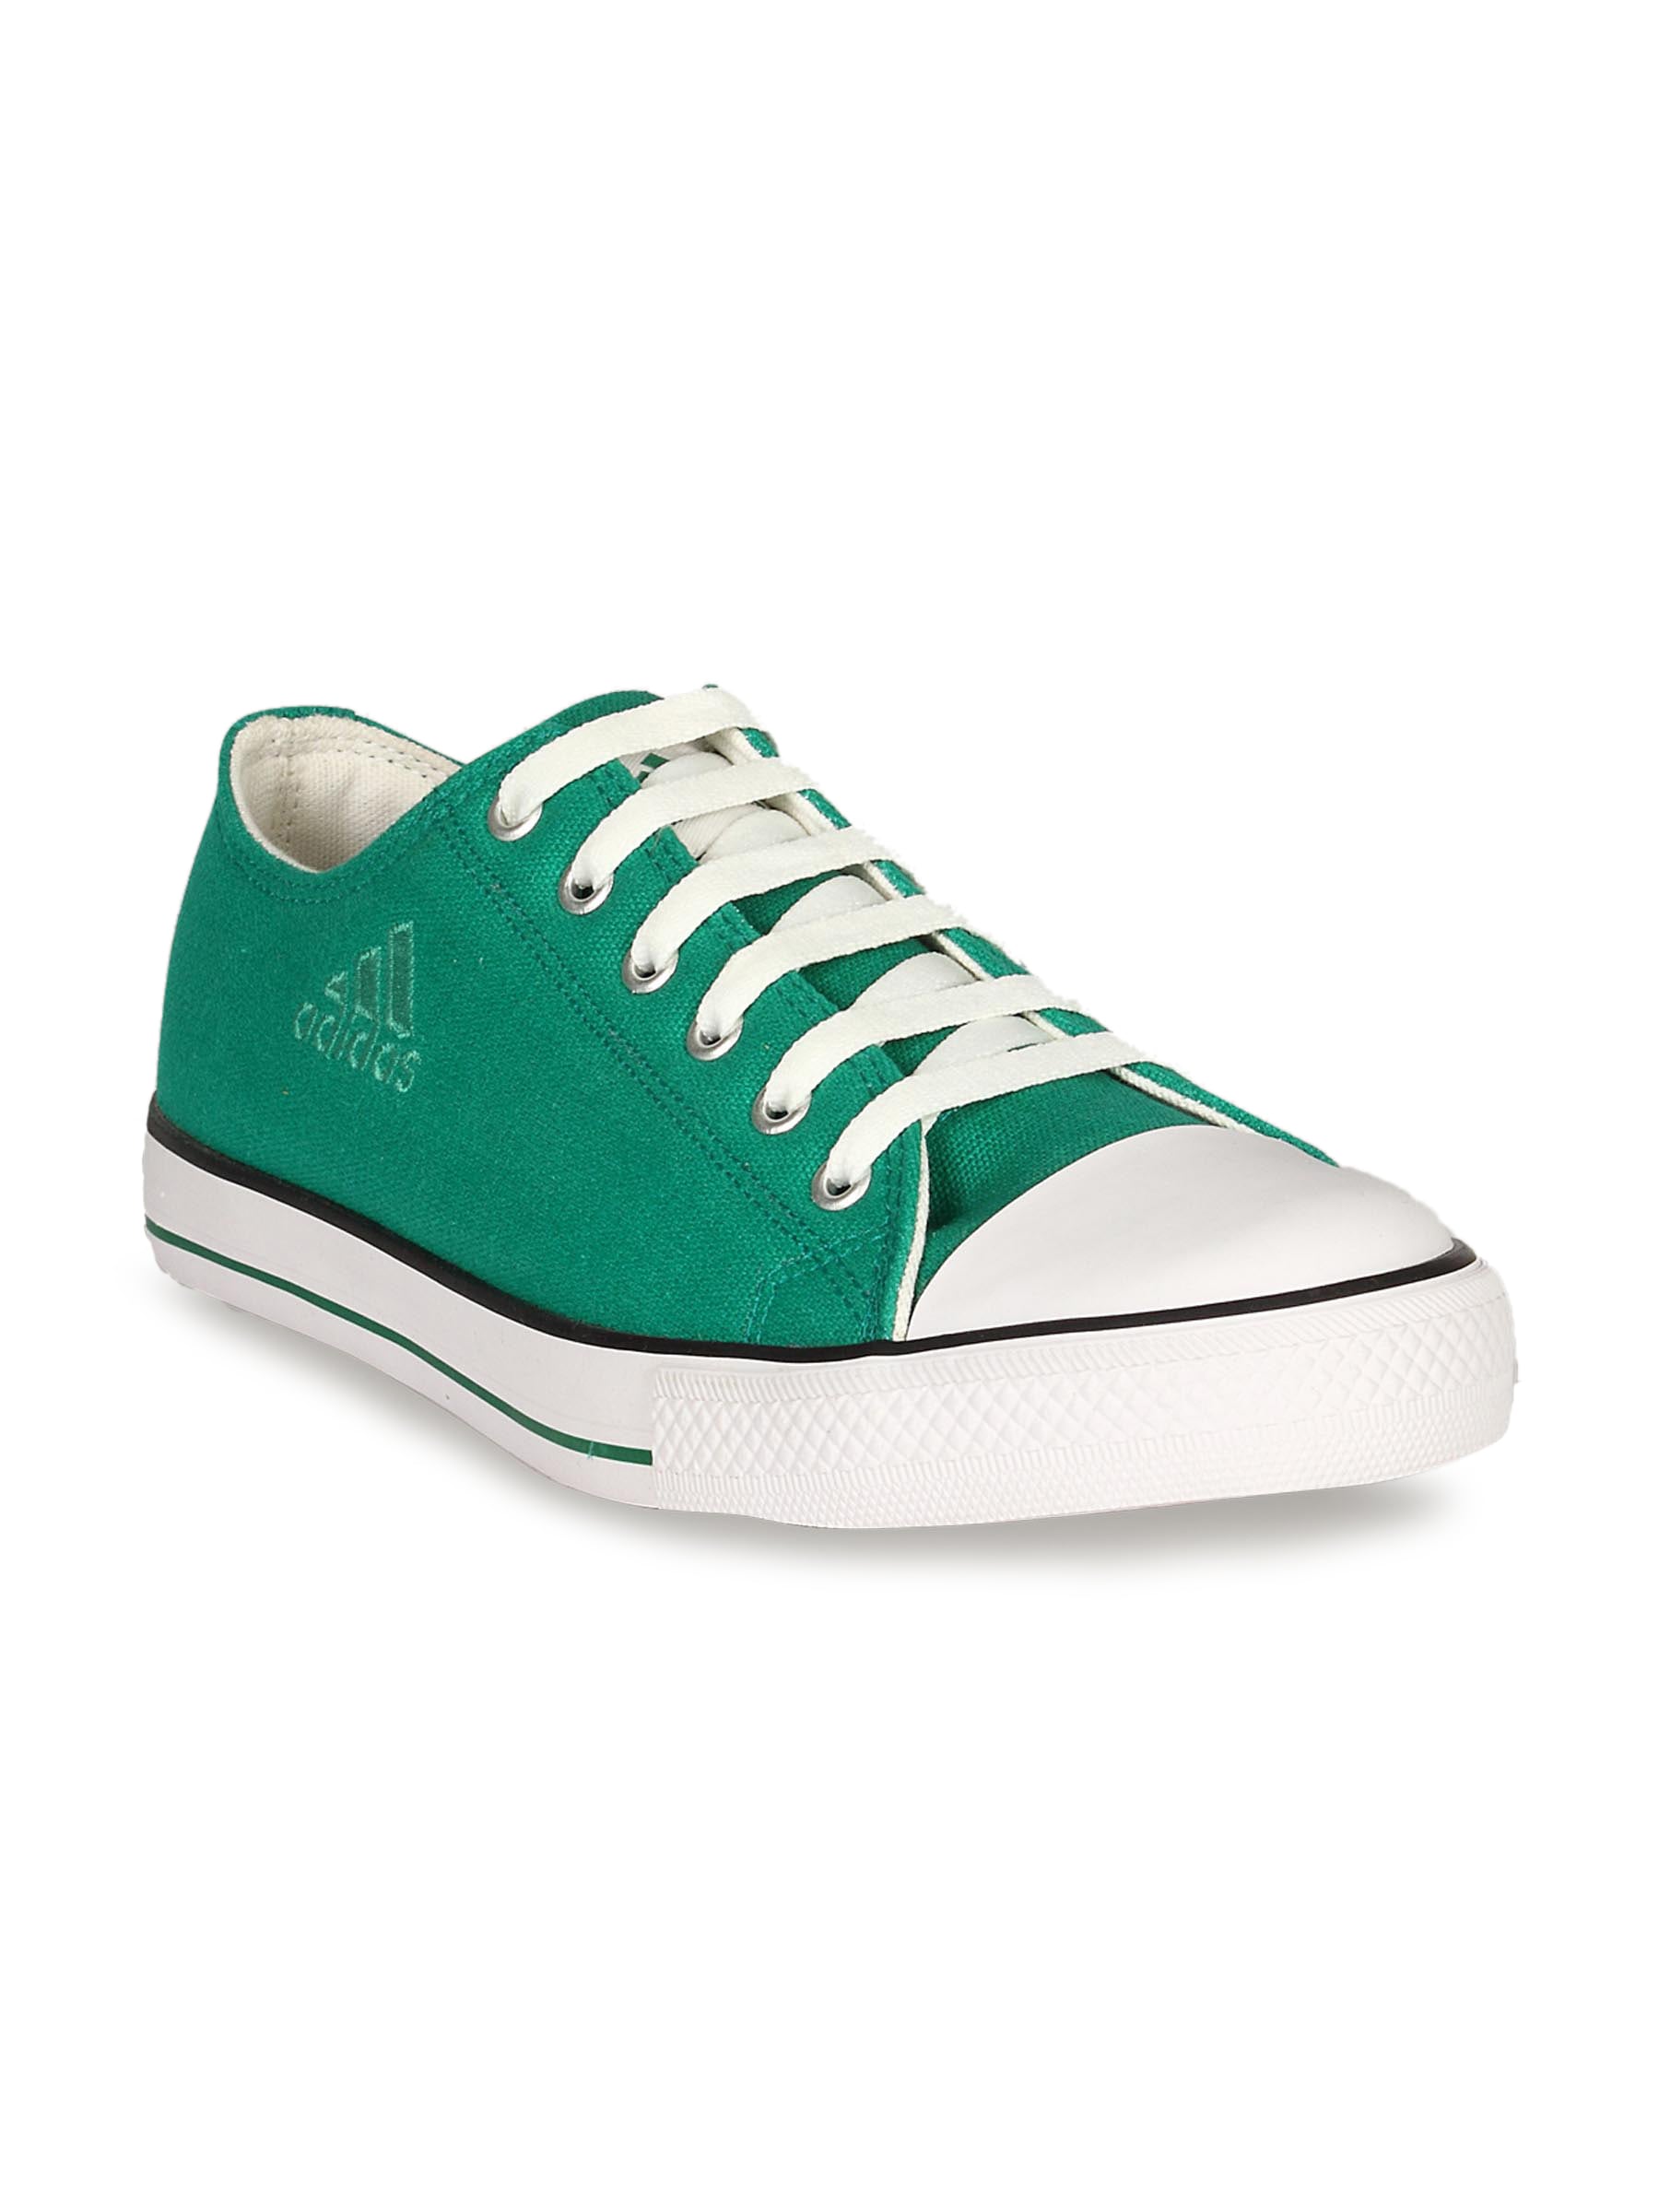 ADIDAS Unisex Color Blast Green White Shoe